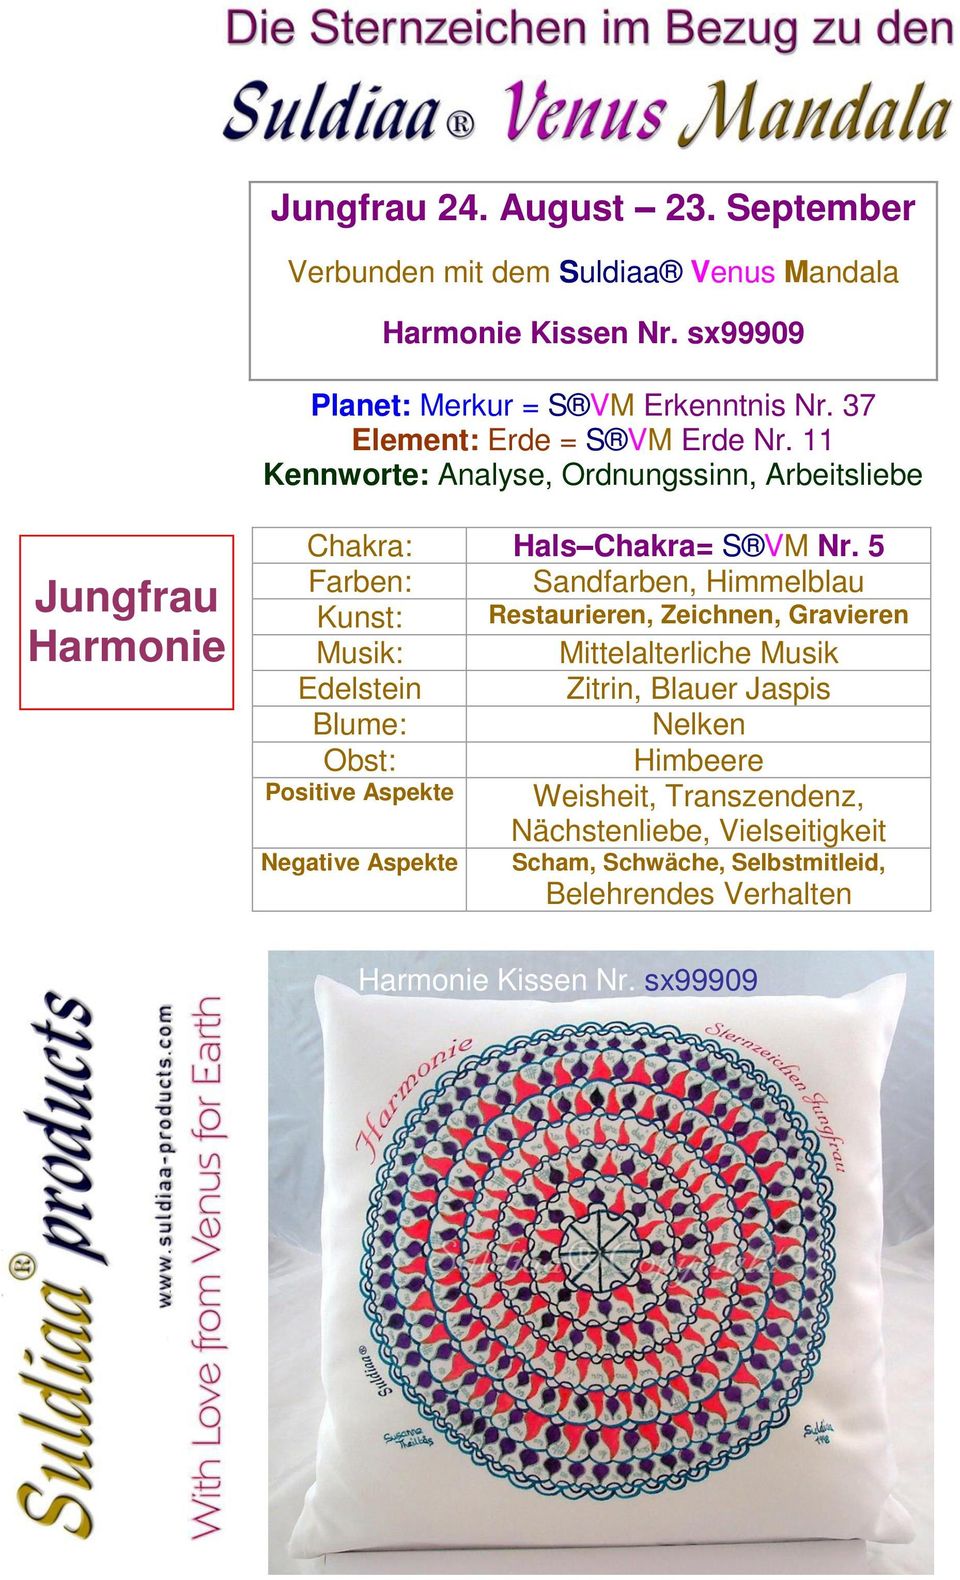 11 Kennworte: Analyse, Ordnungssinn, Arbeitsliebe Jungfrau Harmonie Chakra: Hals Chakra= S VM Nr.